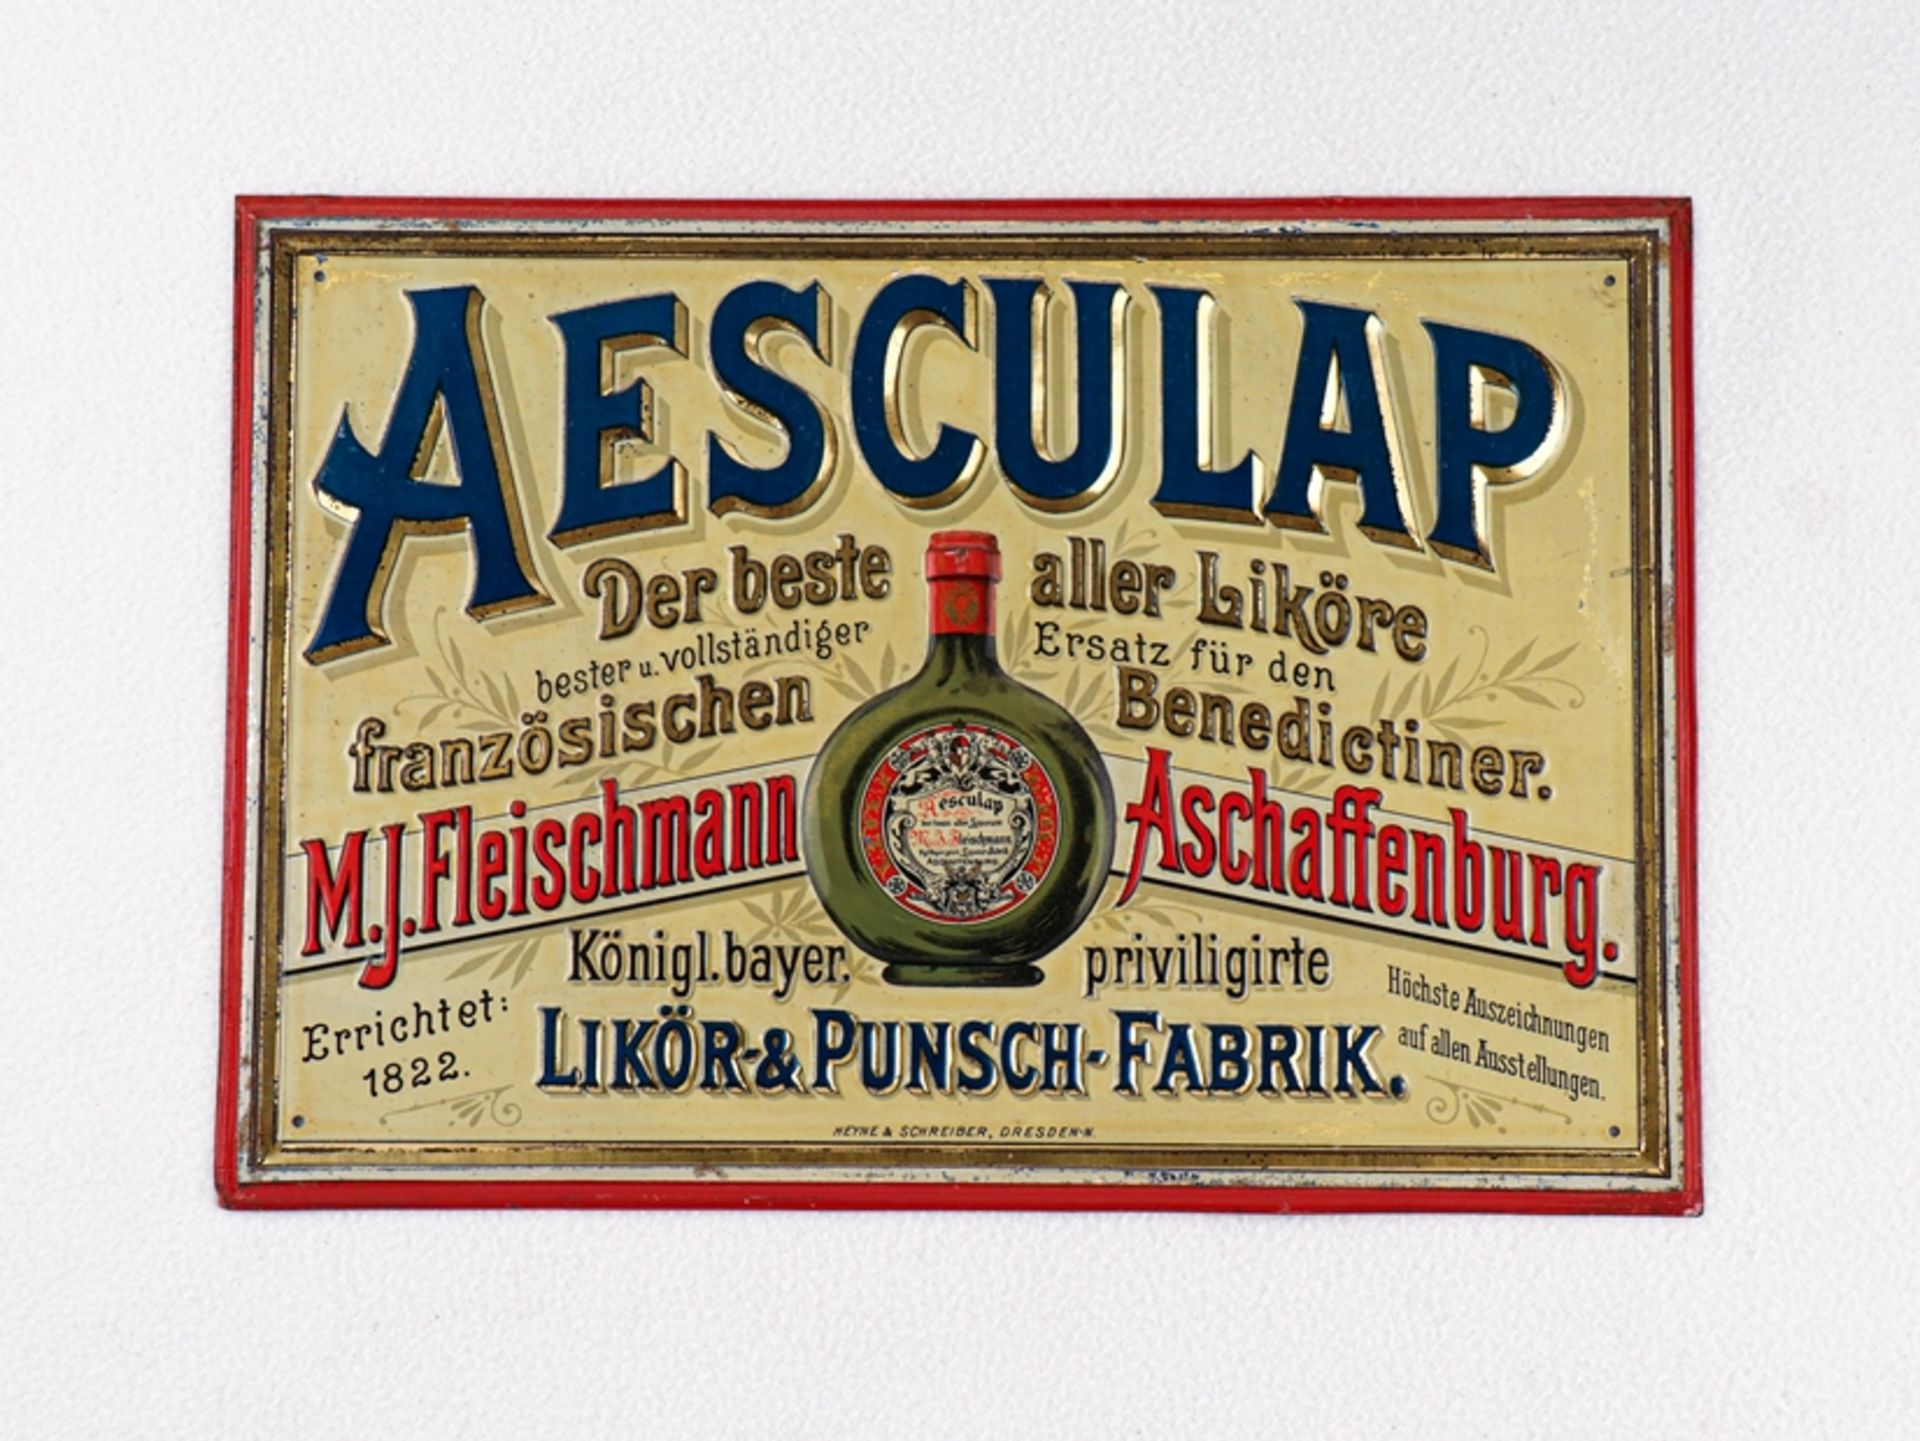 Blechschild Aesculap, der beste aller Liköre, Aschaffenburg, um 1900 - Bild 3 aus 3